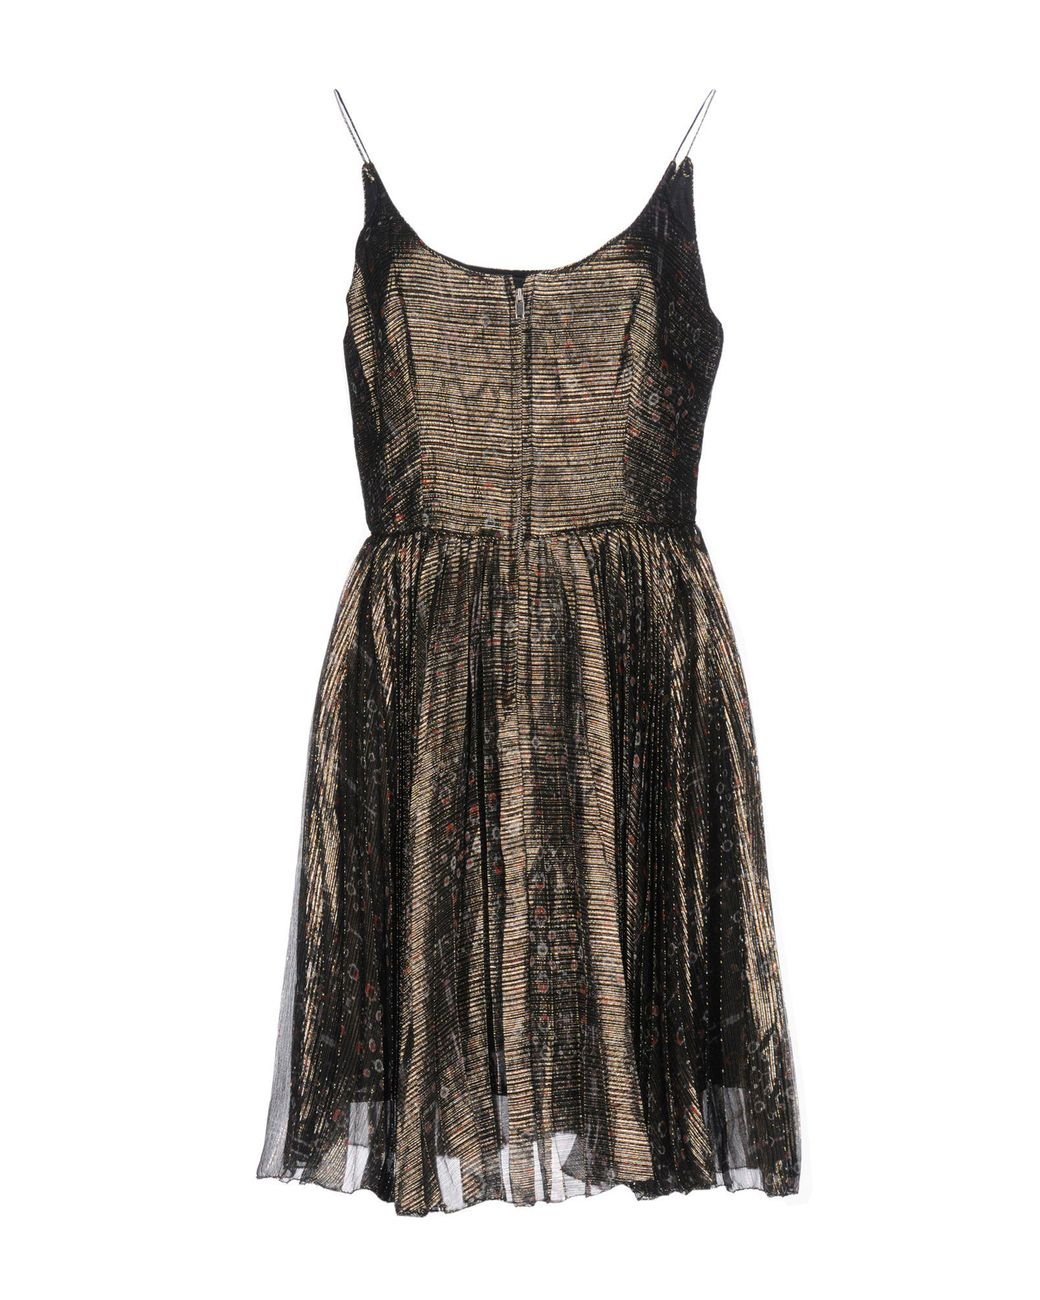 Isabel Marant Silk Short Dress in Black - Lyst